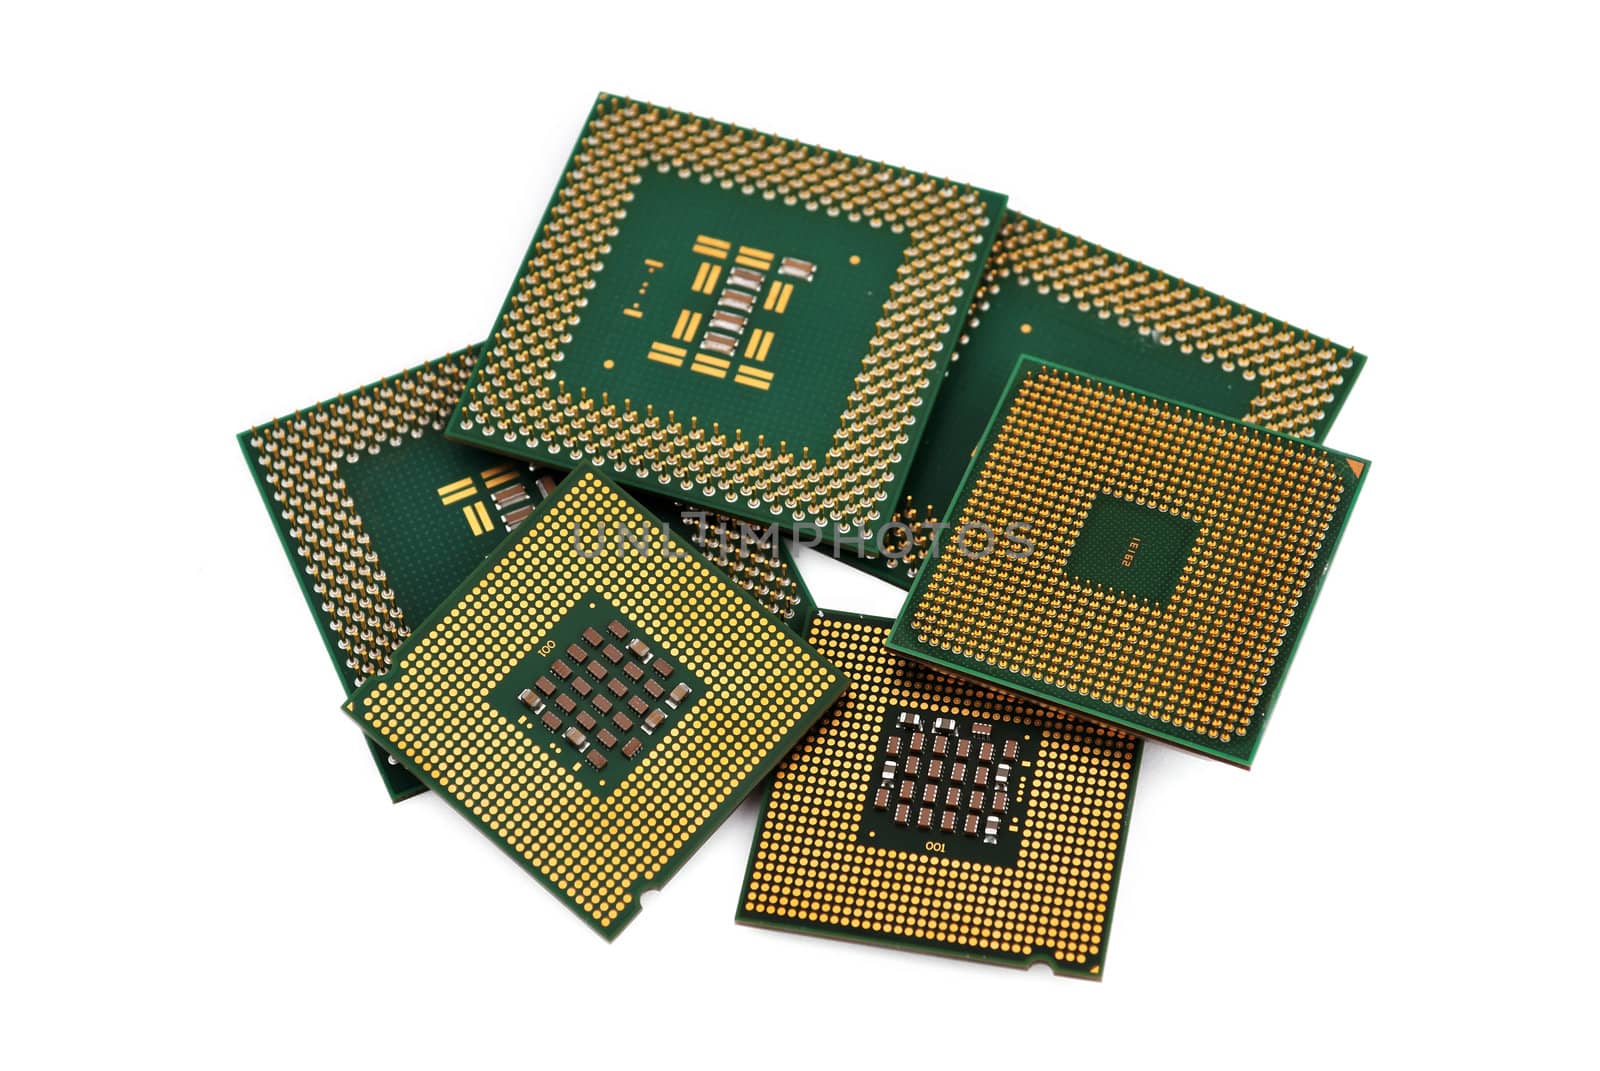 six CPU closeup on white background